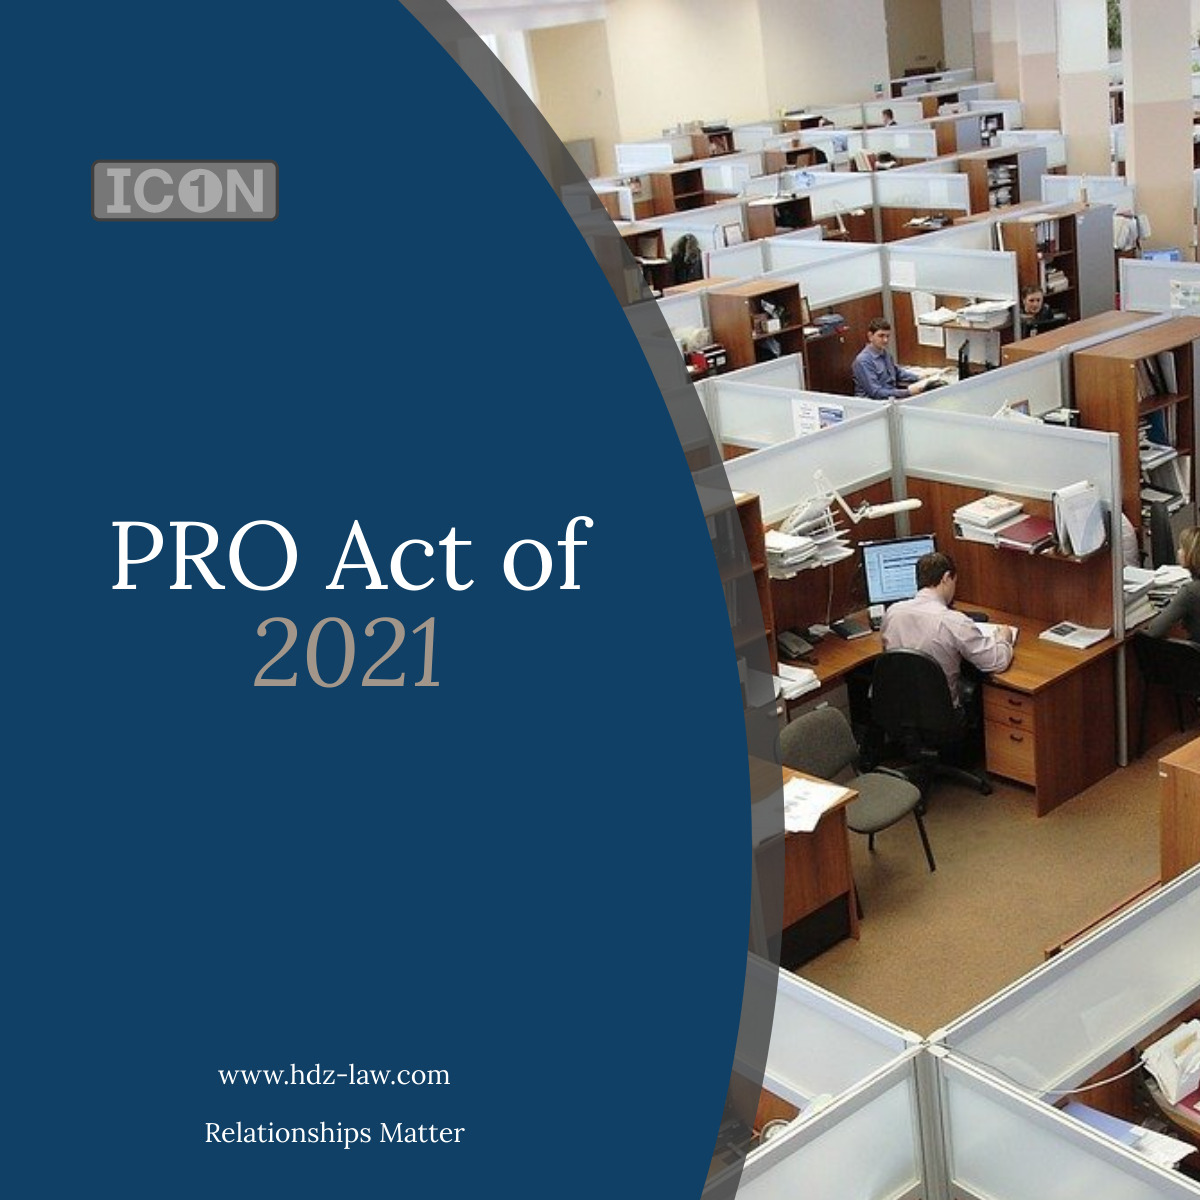 Pro Act 2021 Image